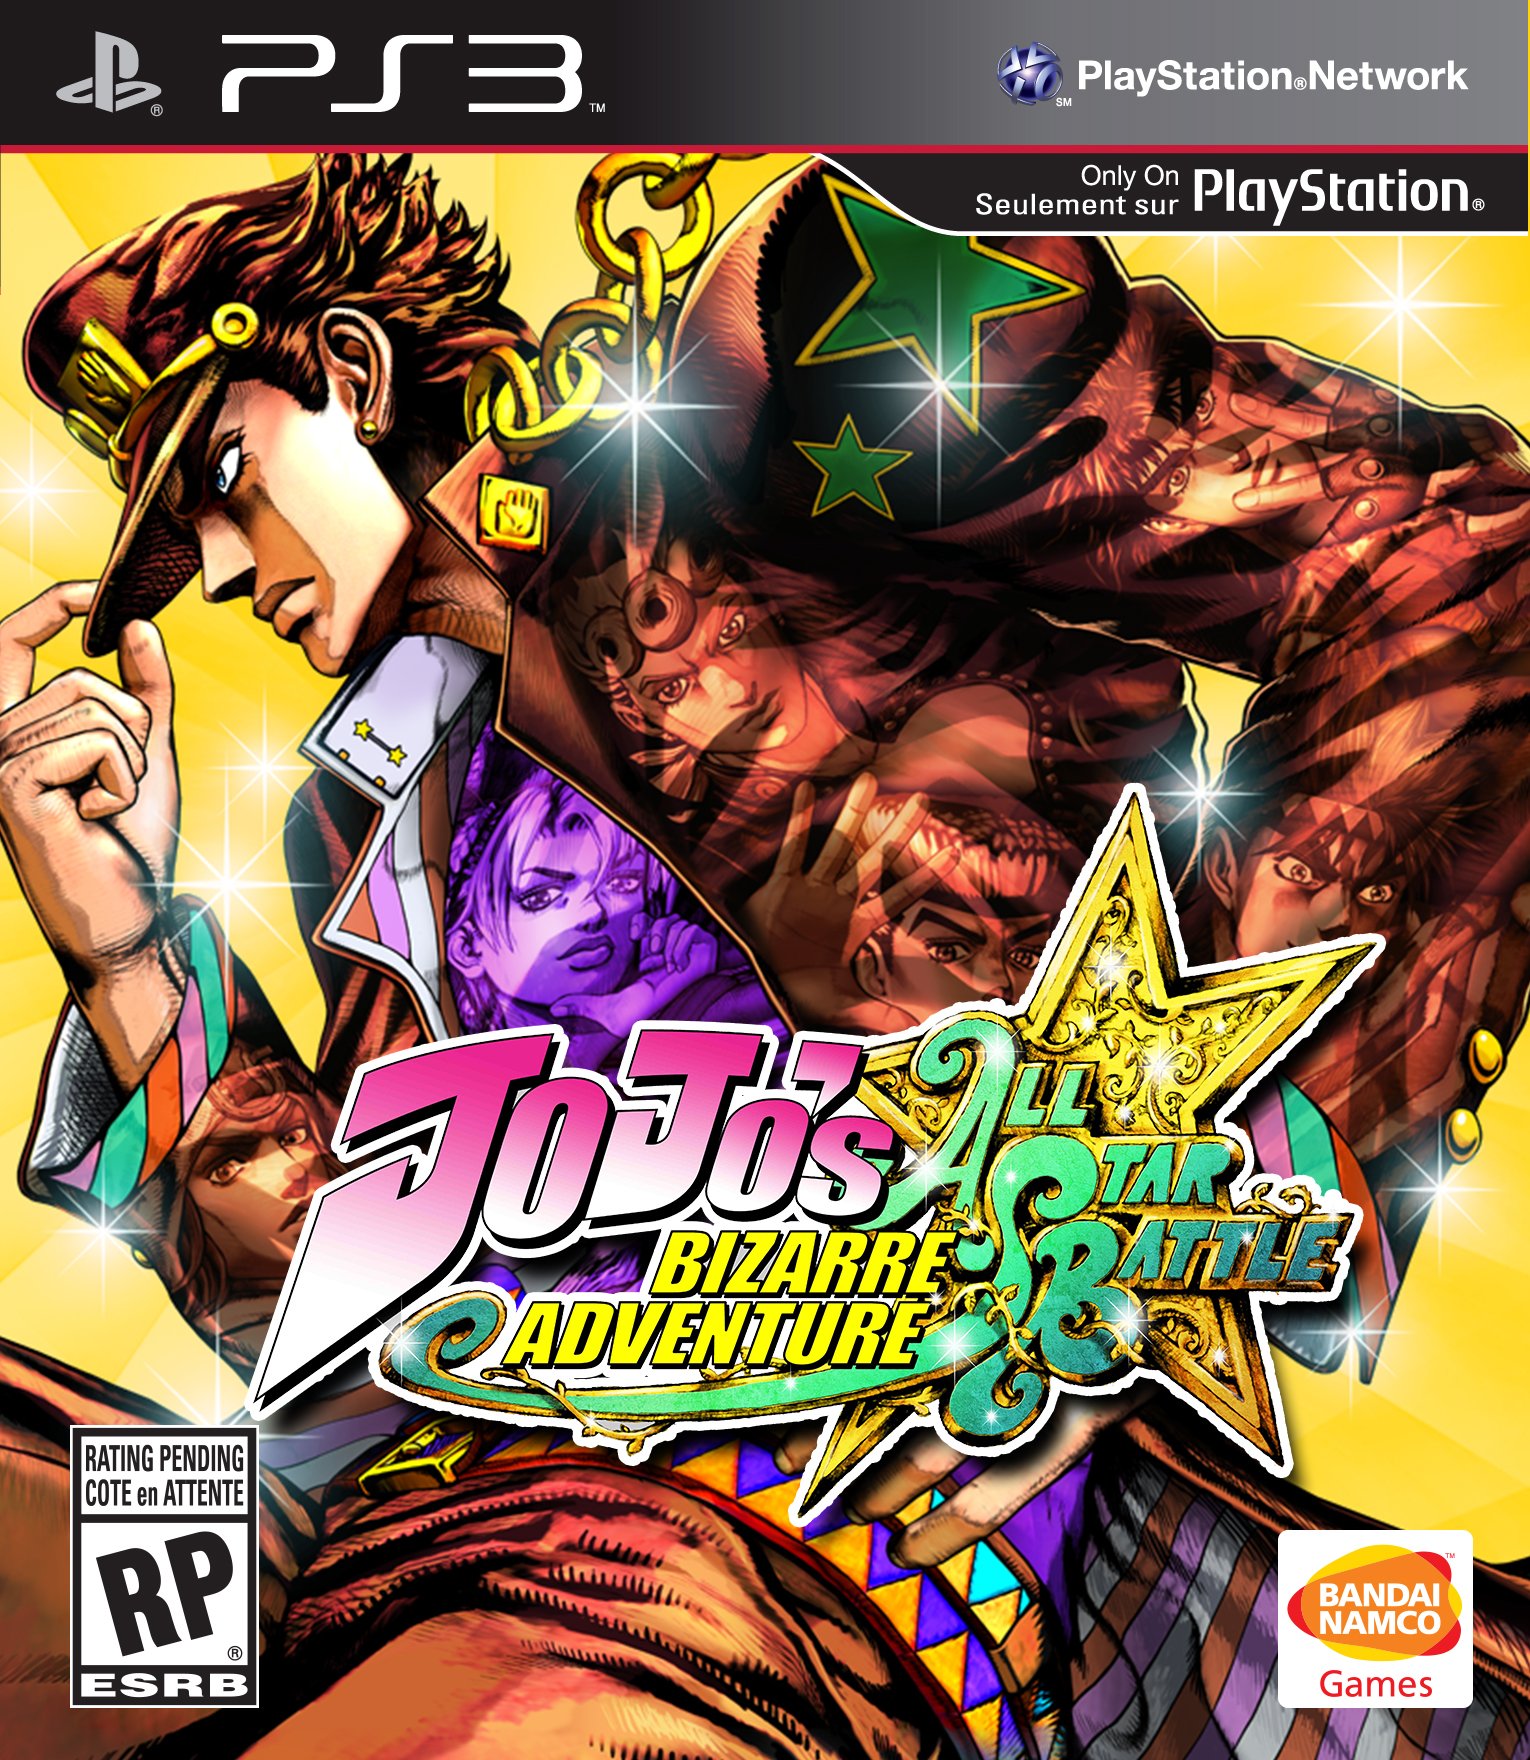 ORA ORA ORA! Jojo's Bizarre Adventure All-Star Battle R Bonuses and Versions